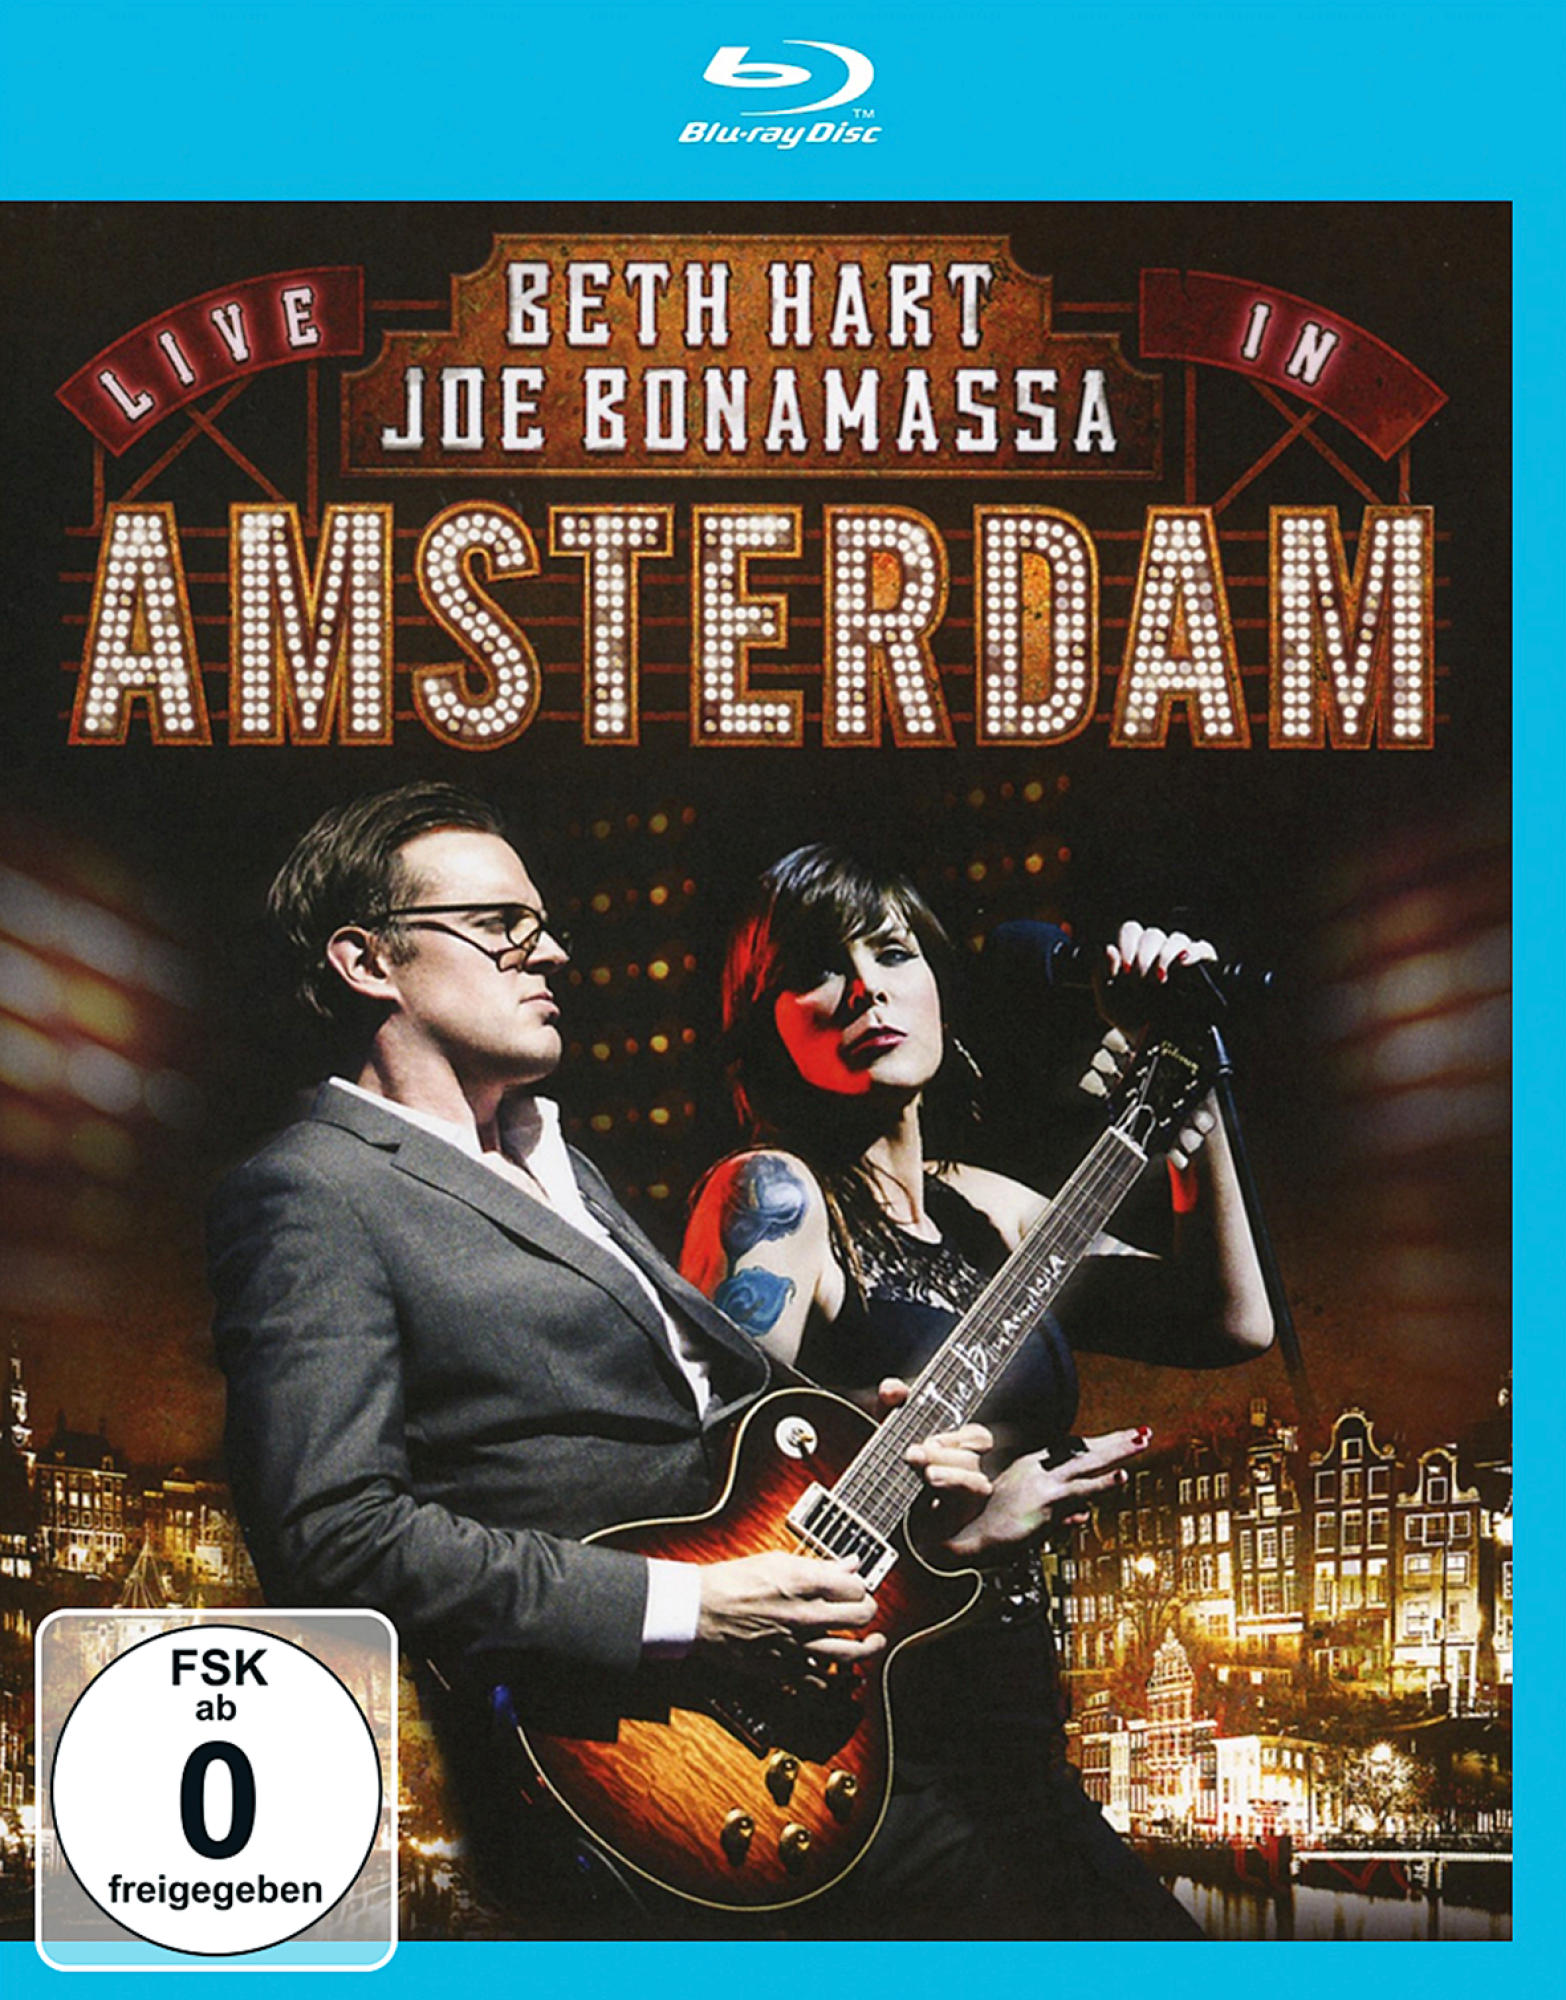 Beth Amsterdam Joe Live - - Bonamassa In (Blu-ray) Hart,